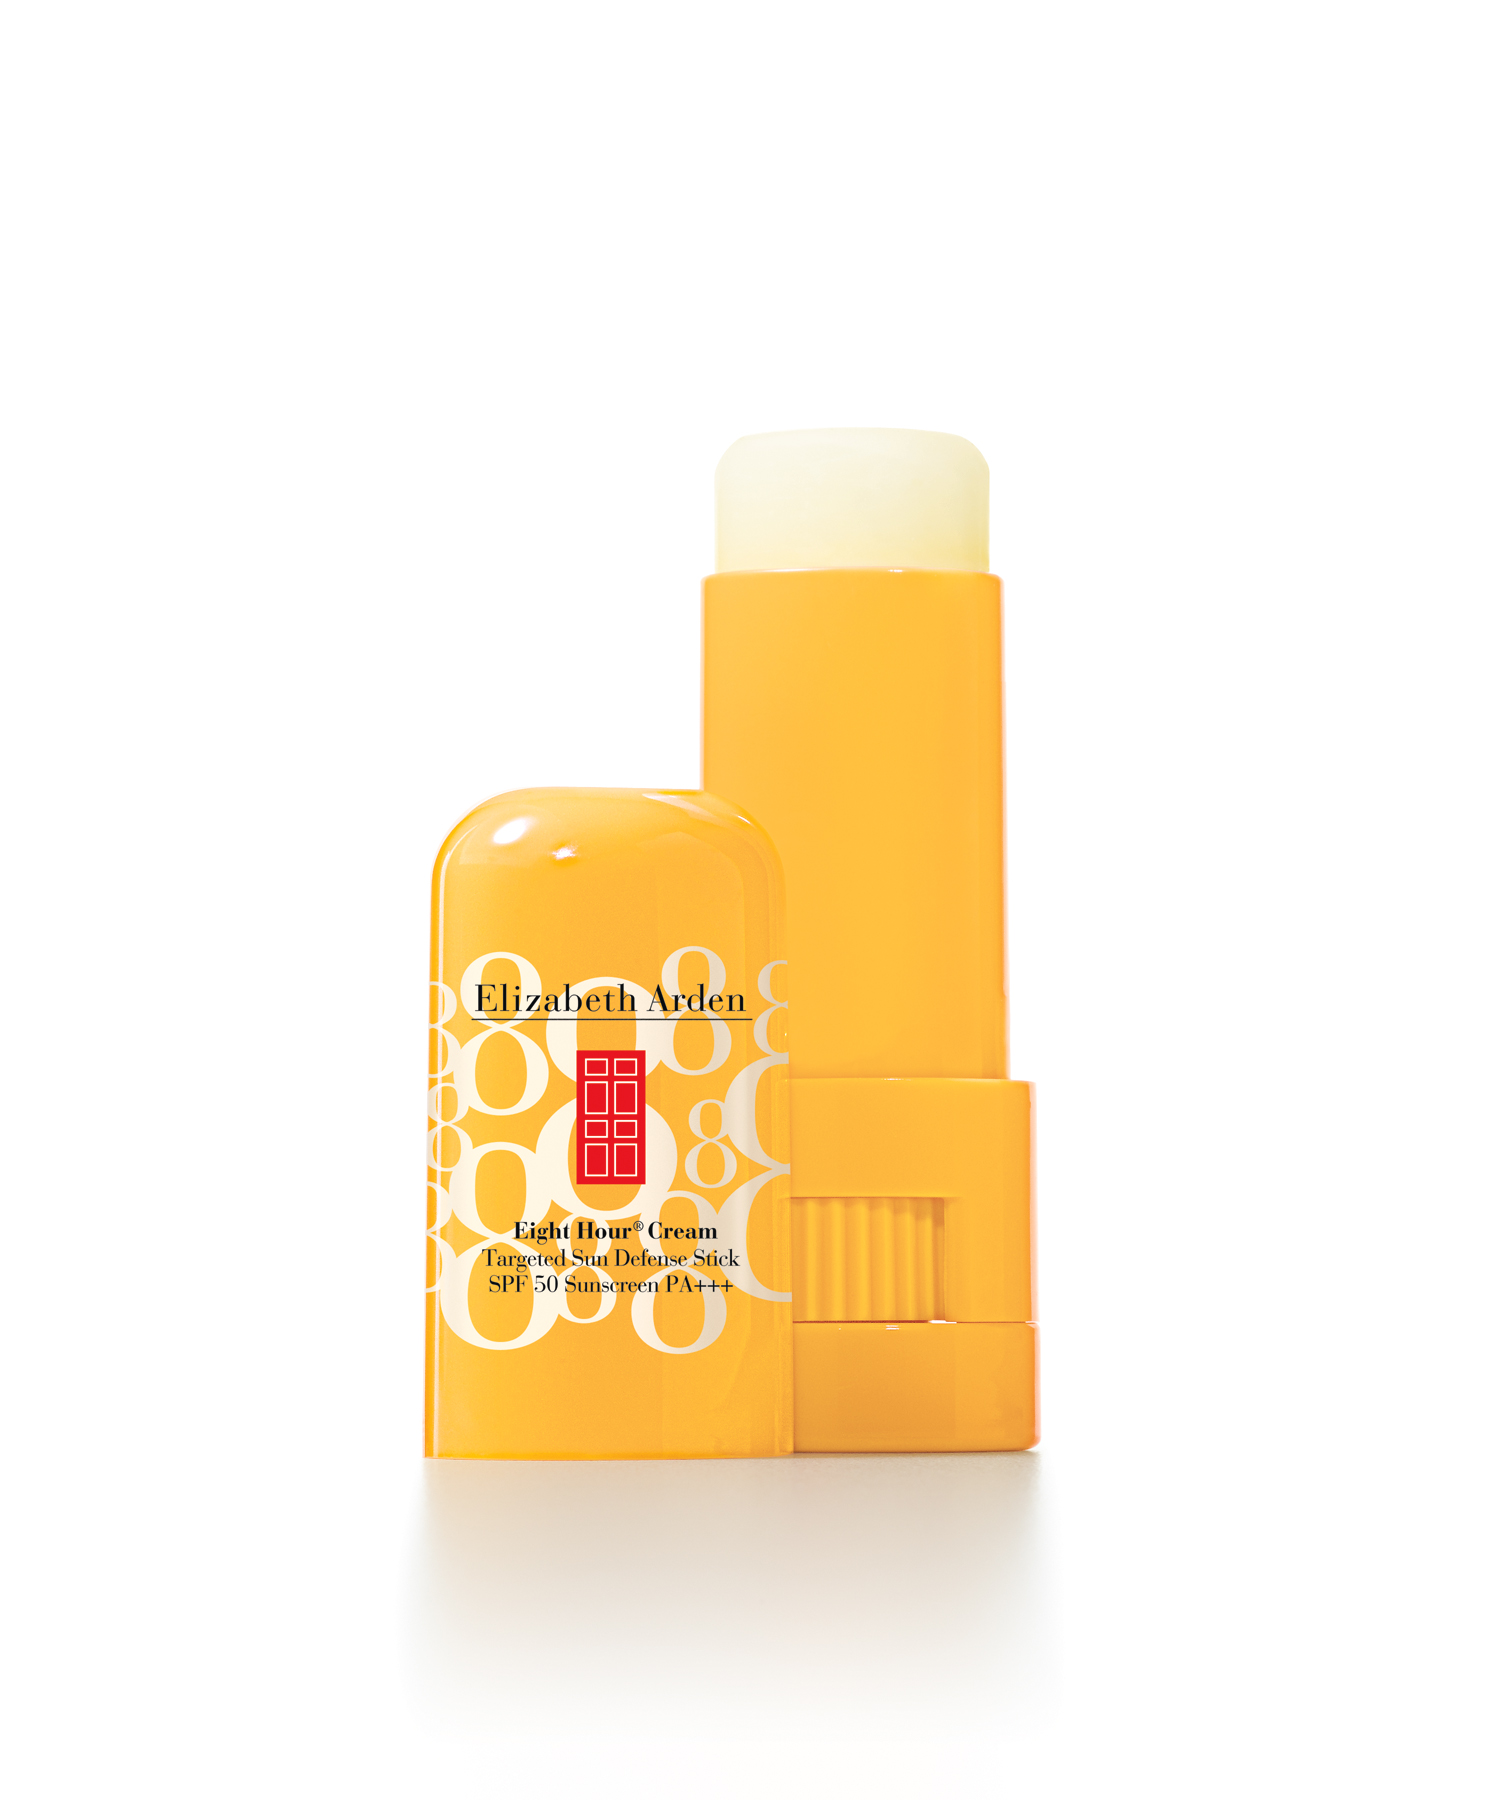 Elizabeth Arden Eight Hour Cream Targeted Sun Defense Stick SPF 50 Sunscreen PA+++